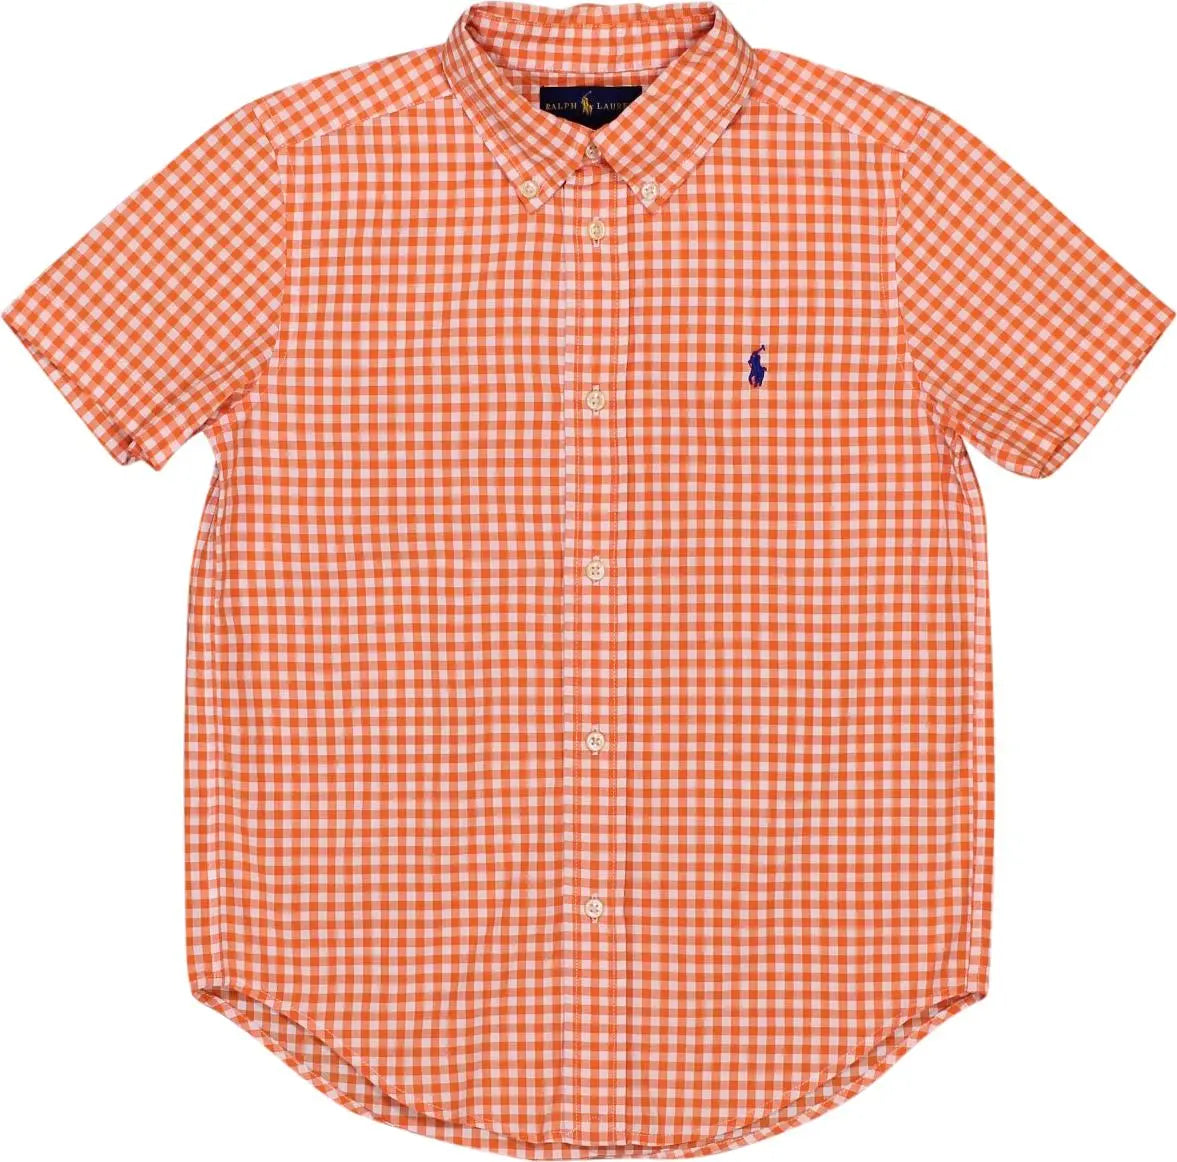 Ralph Lauren - Orange Checked Shirt by Ralph Lauren- ThriftTale.com - Vintage and second handclothing